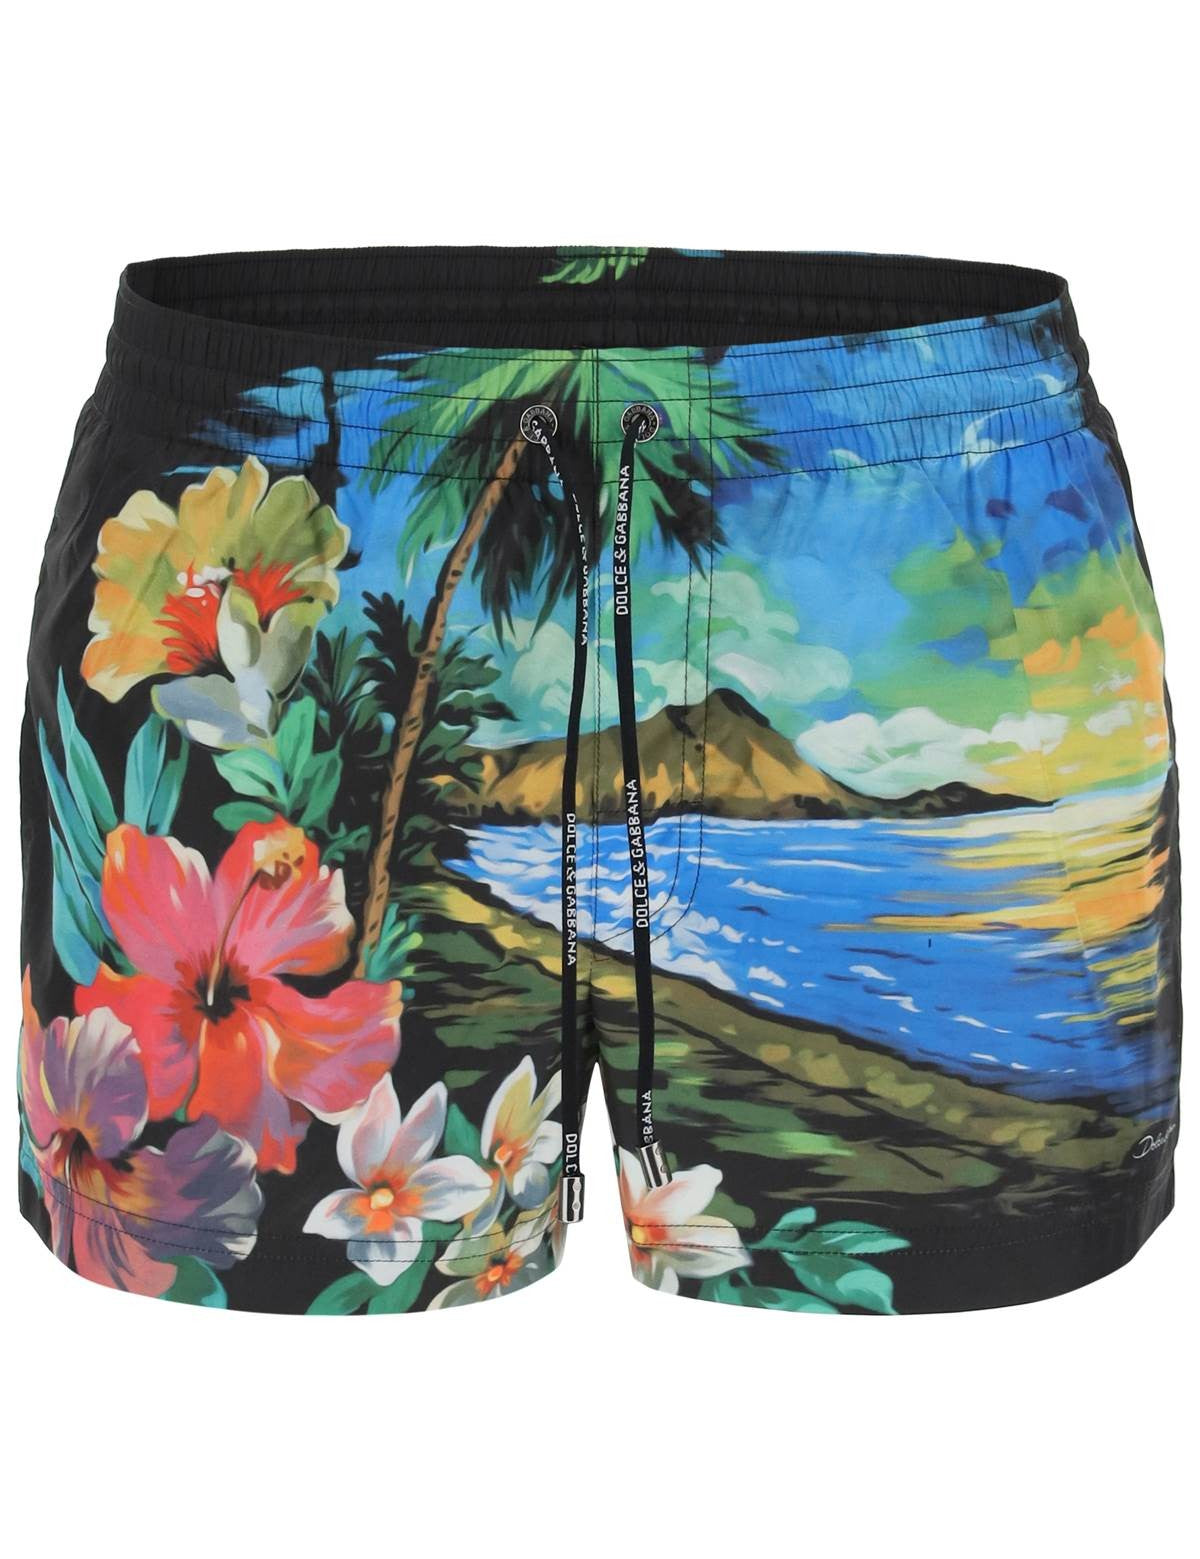 dolce-gabbana-hawaii-print-swim-trunks.jpg